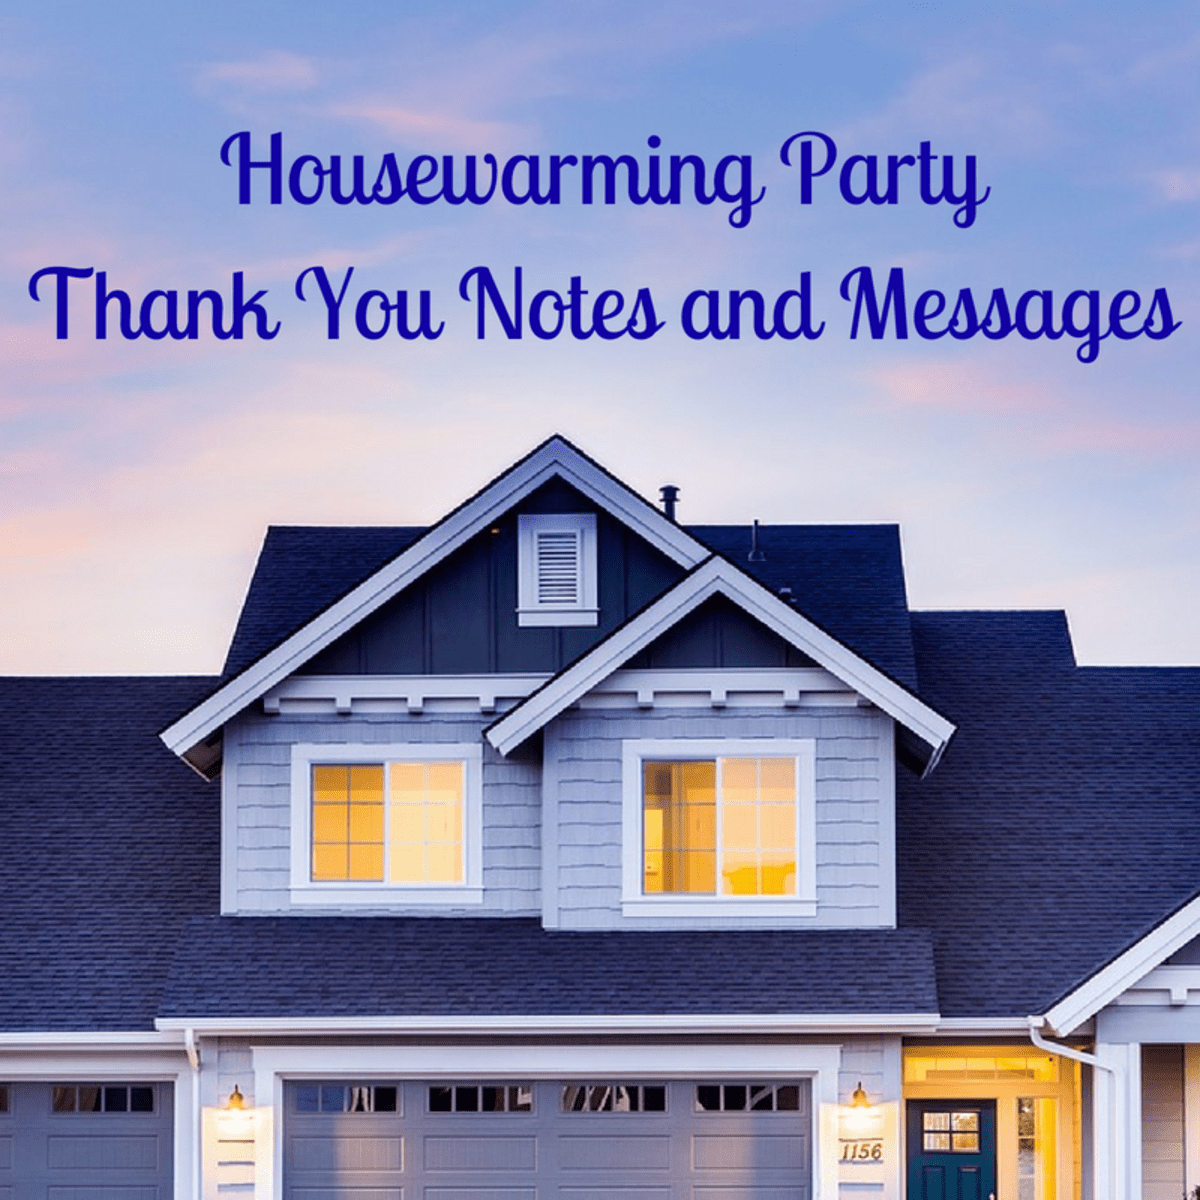 100 Meaningful Housewarming Wishes to Make Anyone Feel Welcome